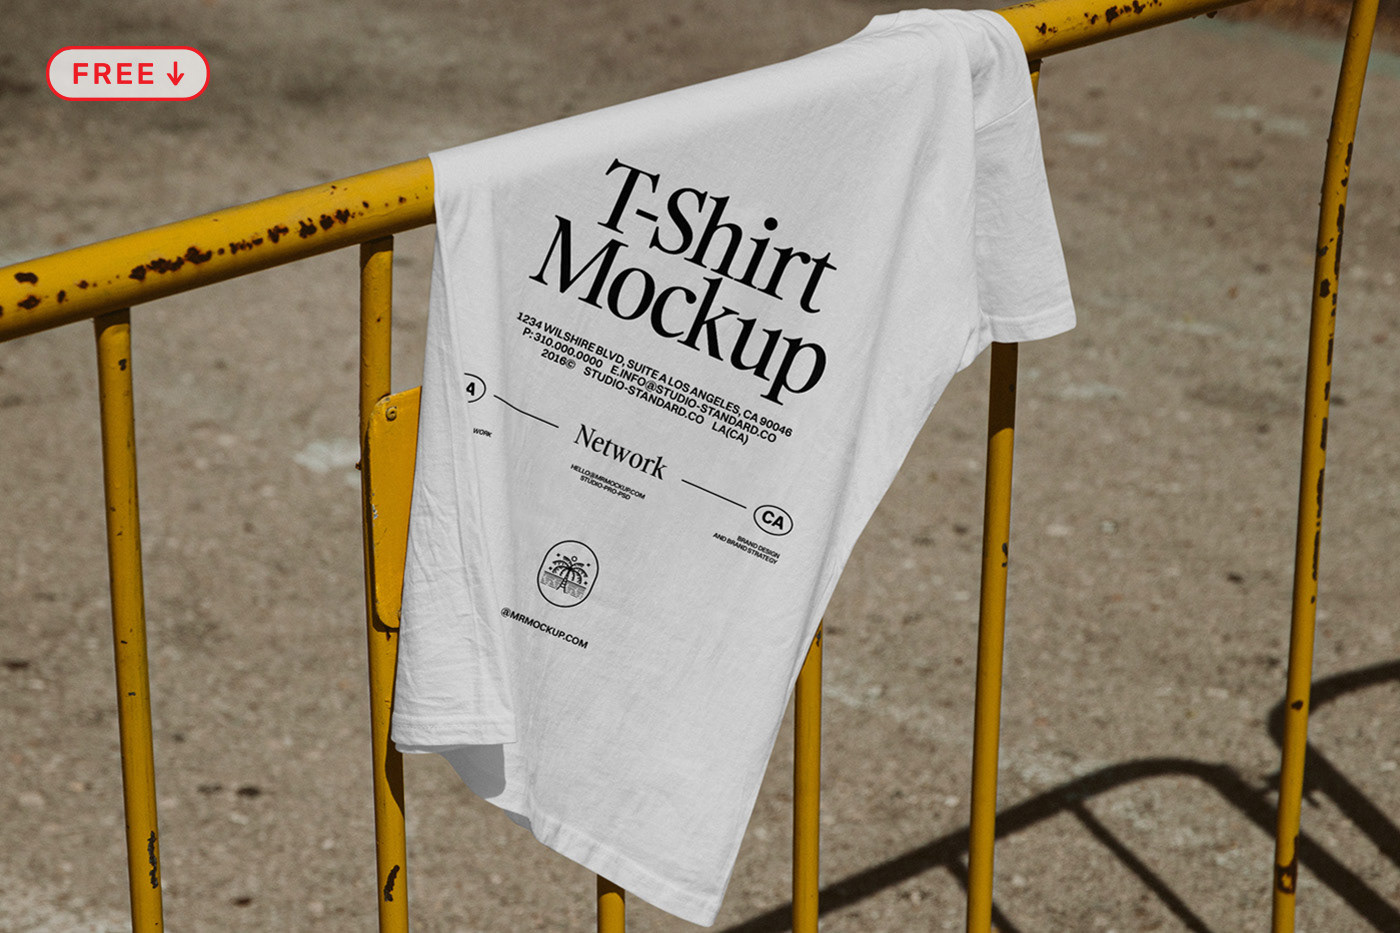 free t-shirt mockup free download Free T-shirt Mockup street mockup Free Template psd